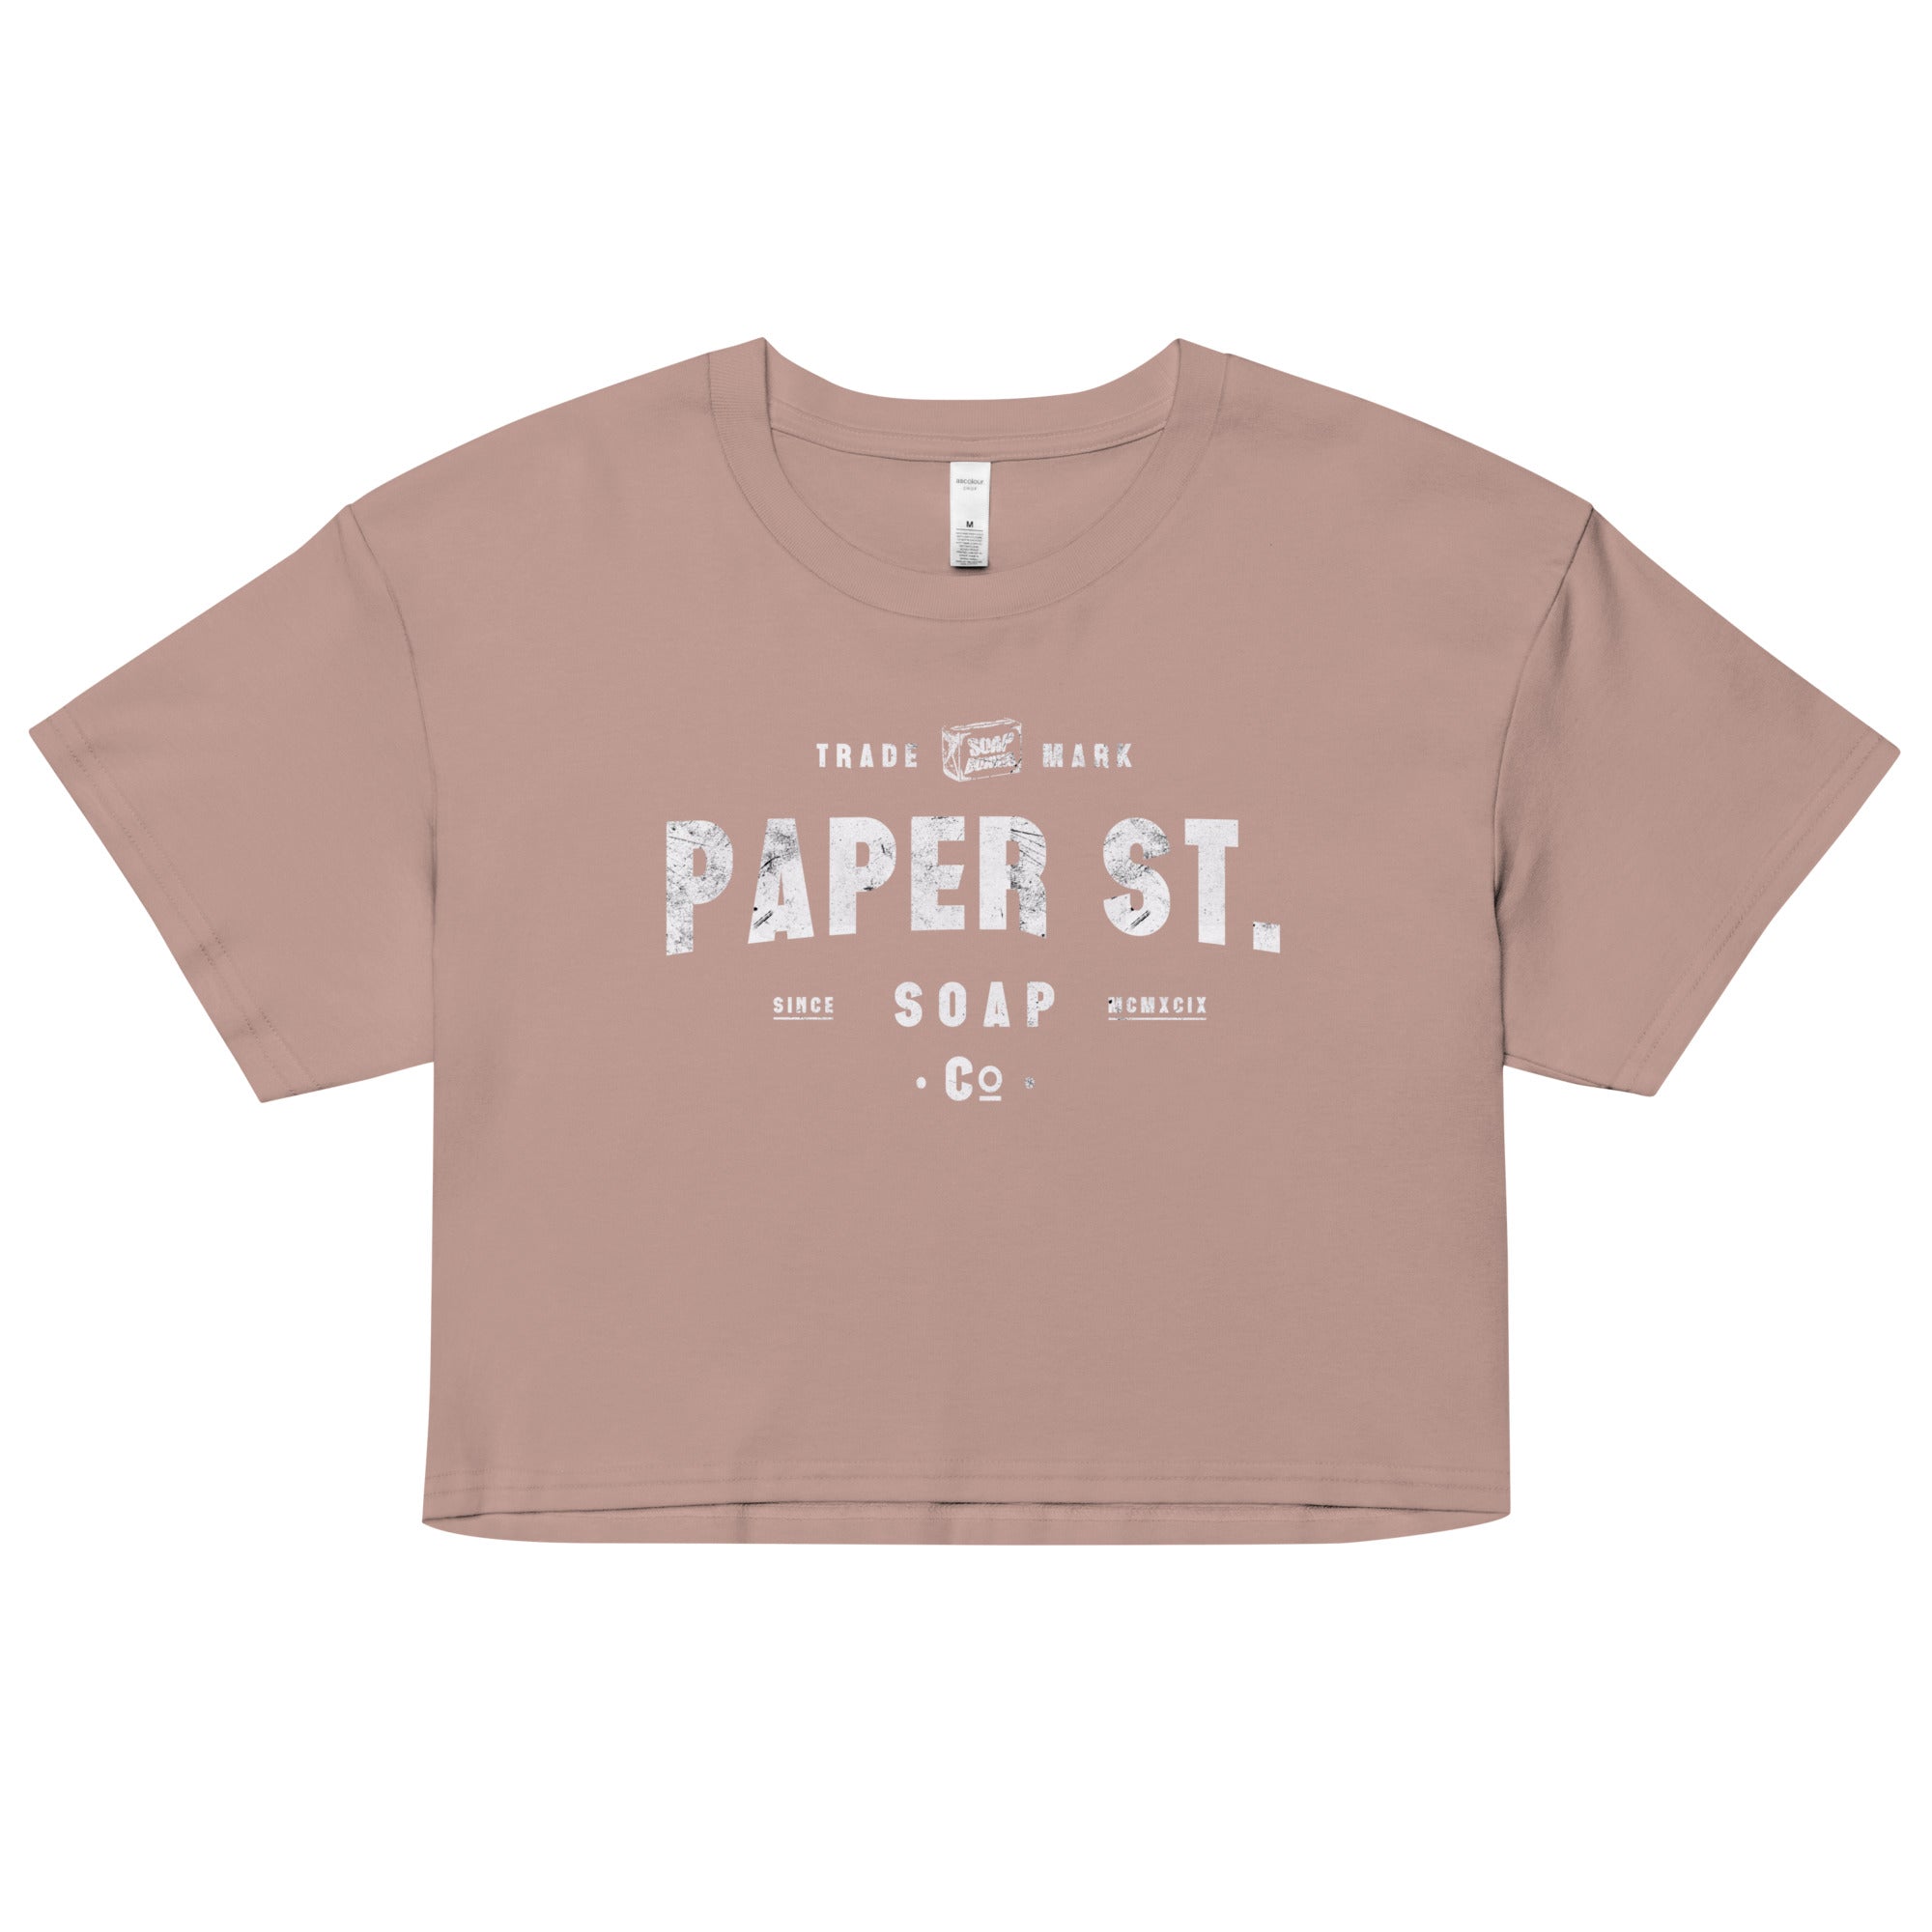 a black t - shirt that says paper st soap